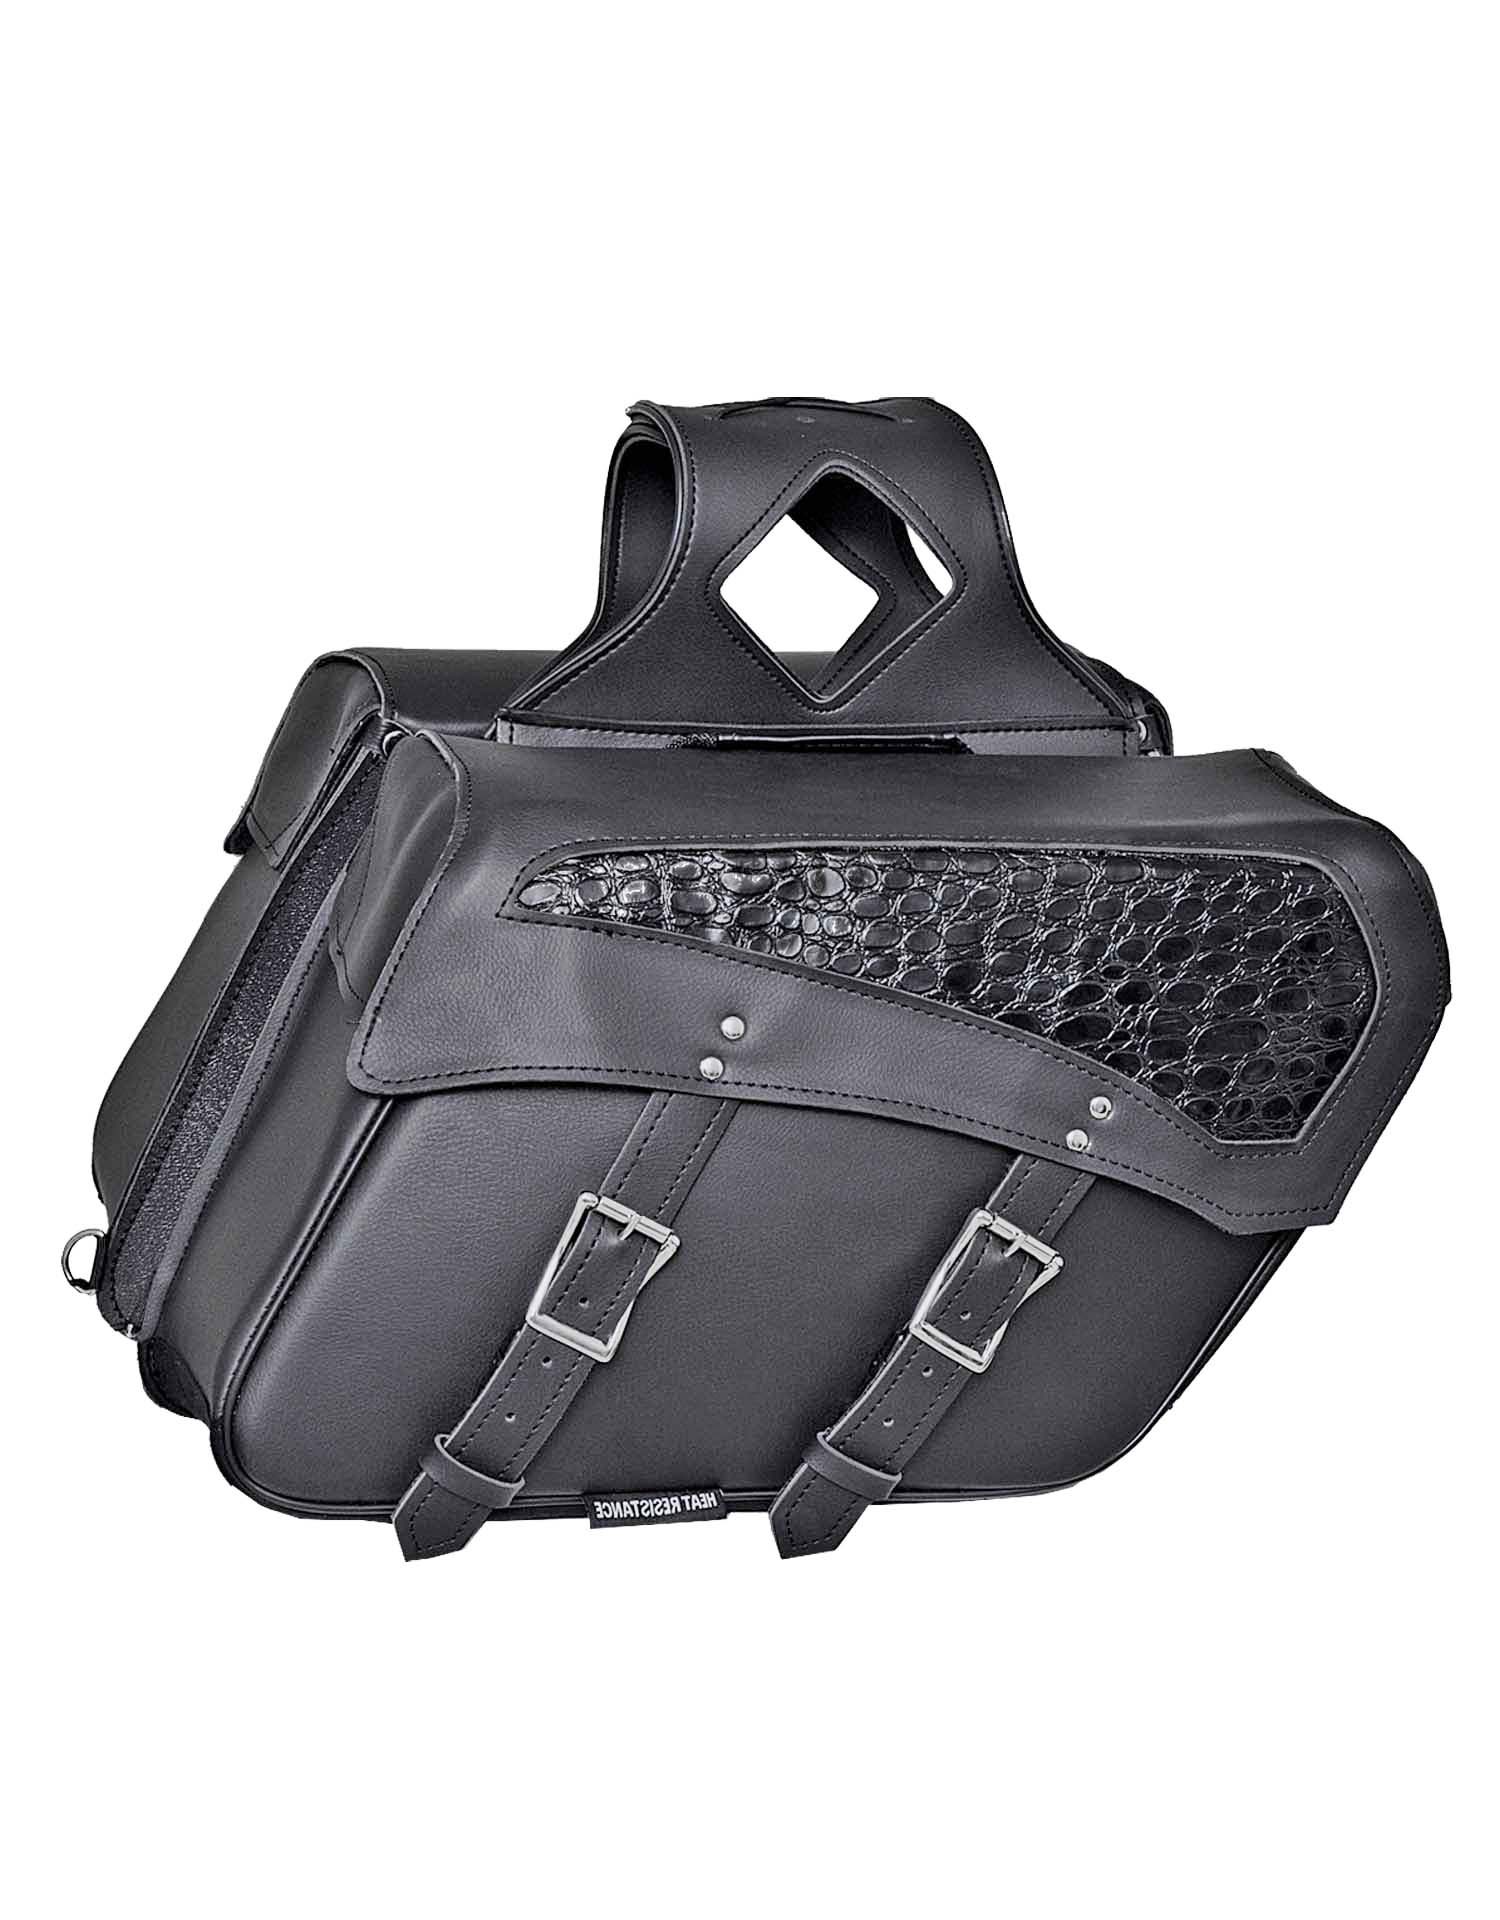 PVC Saddlebag With Croc Trim, 16” x 11” x 7”